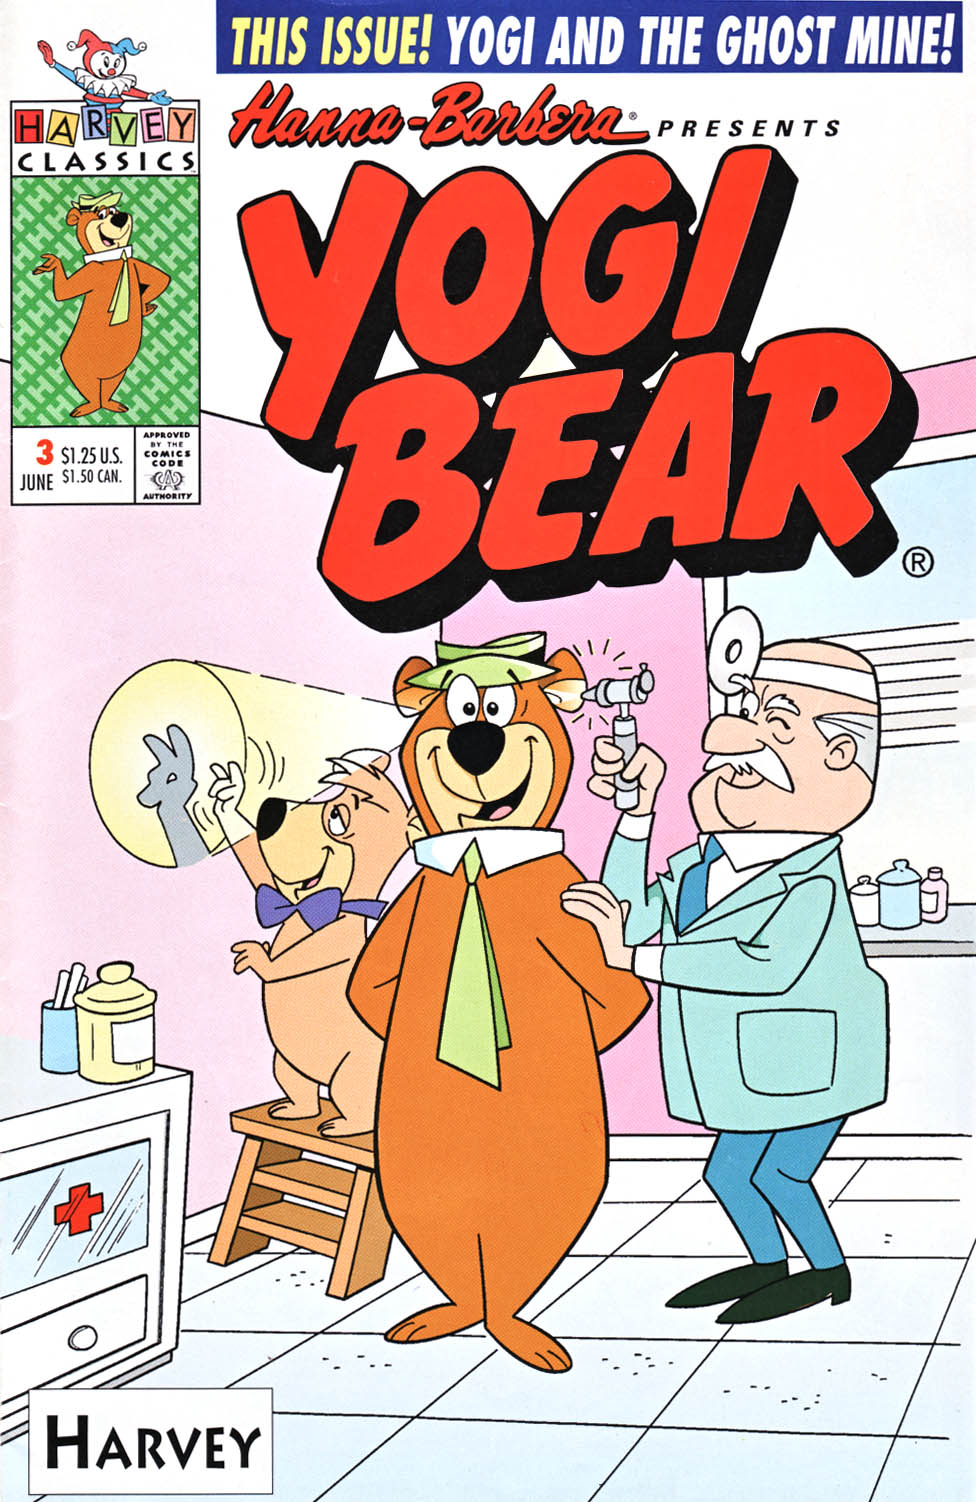 Yogi Bear 1992 Issue 3 | Read Yogi Bear 1992 Issue 3 comic online in high  quality. Read Full Comic online for free - Read comics online in high  quality .| READ COMIC ONLINE